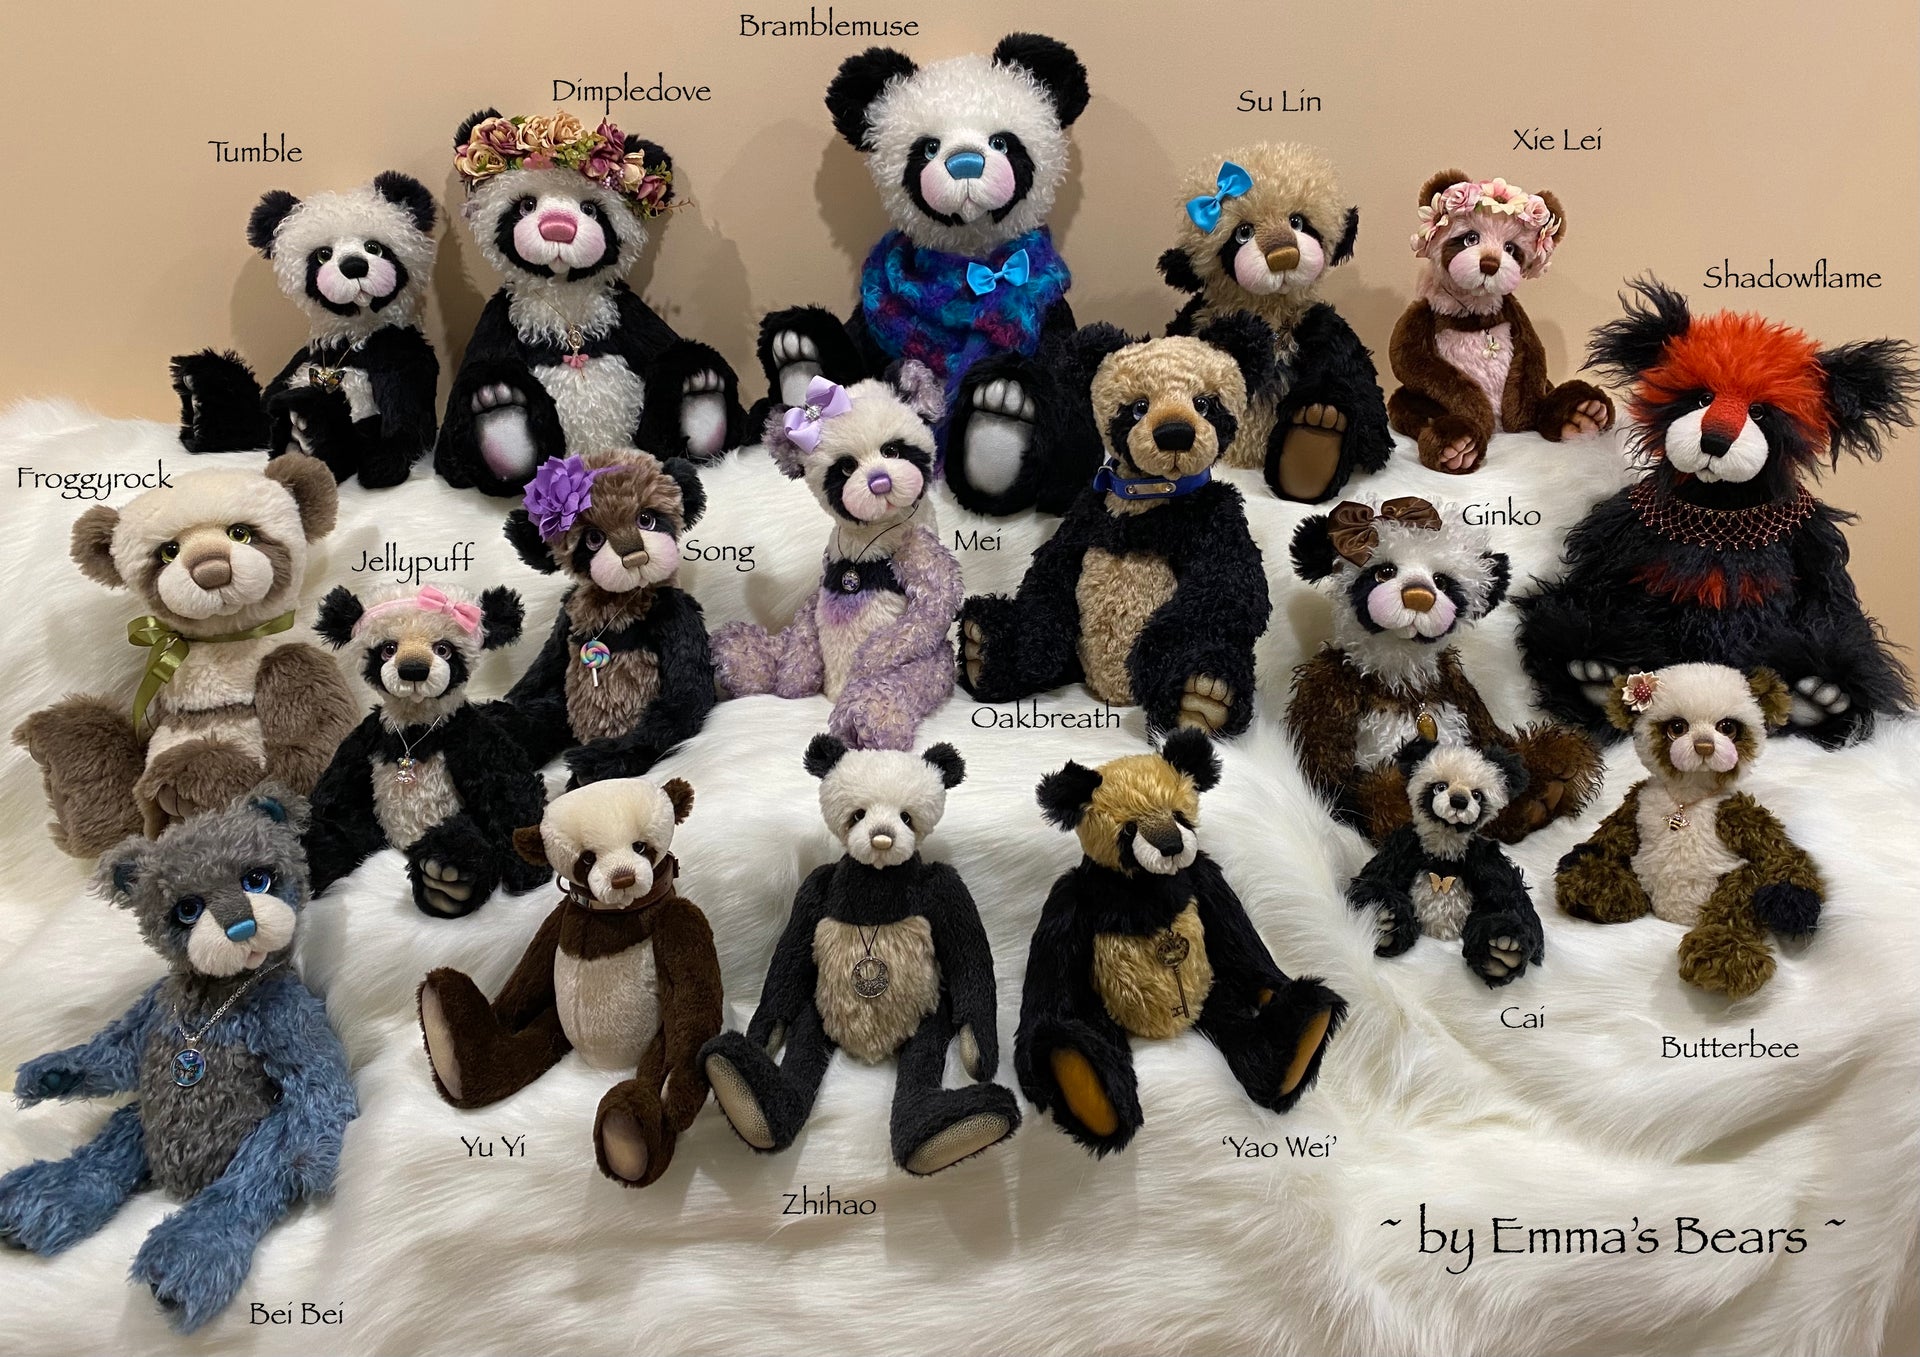 Shadowflame - 19" mohair artist panda bear by Emma's Bears  - OOAK